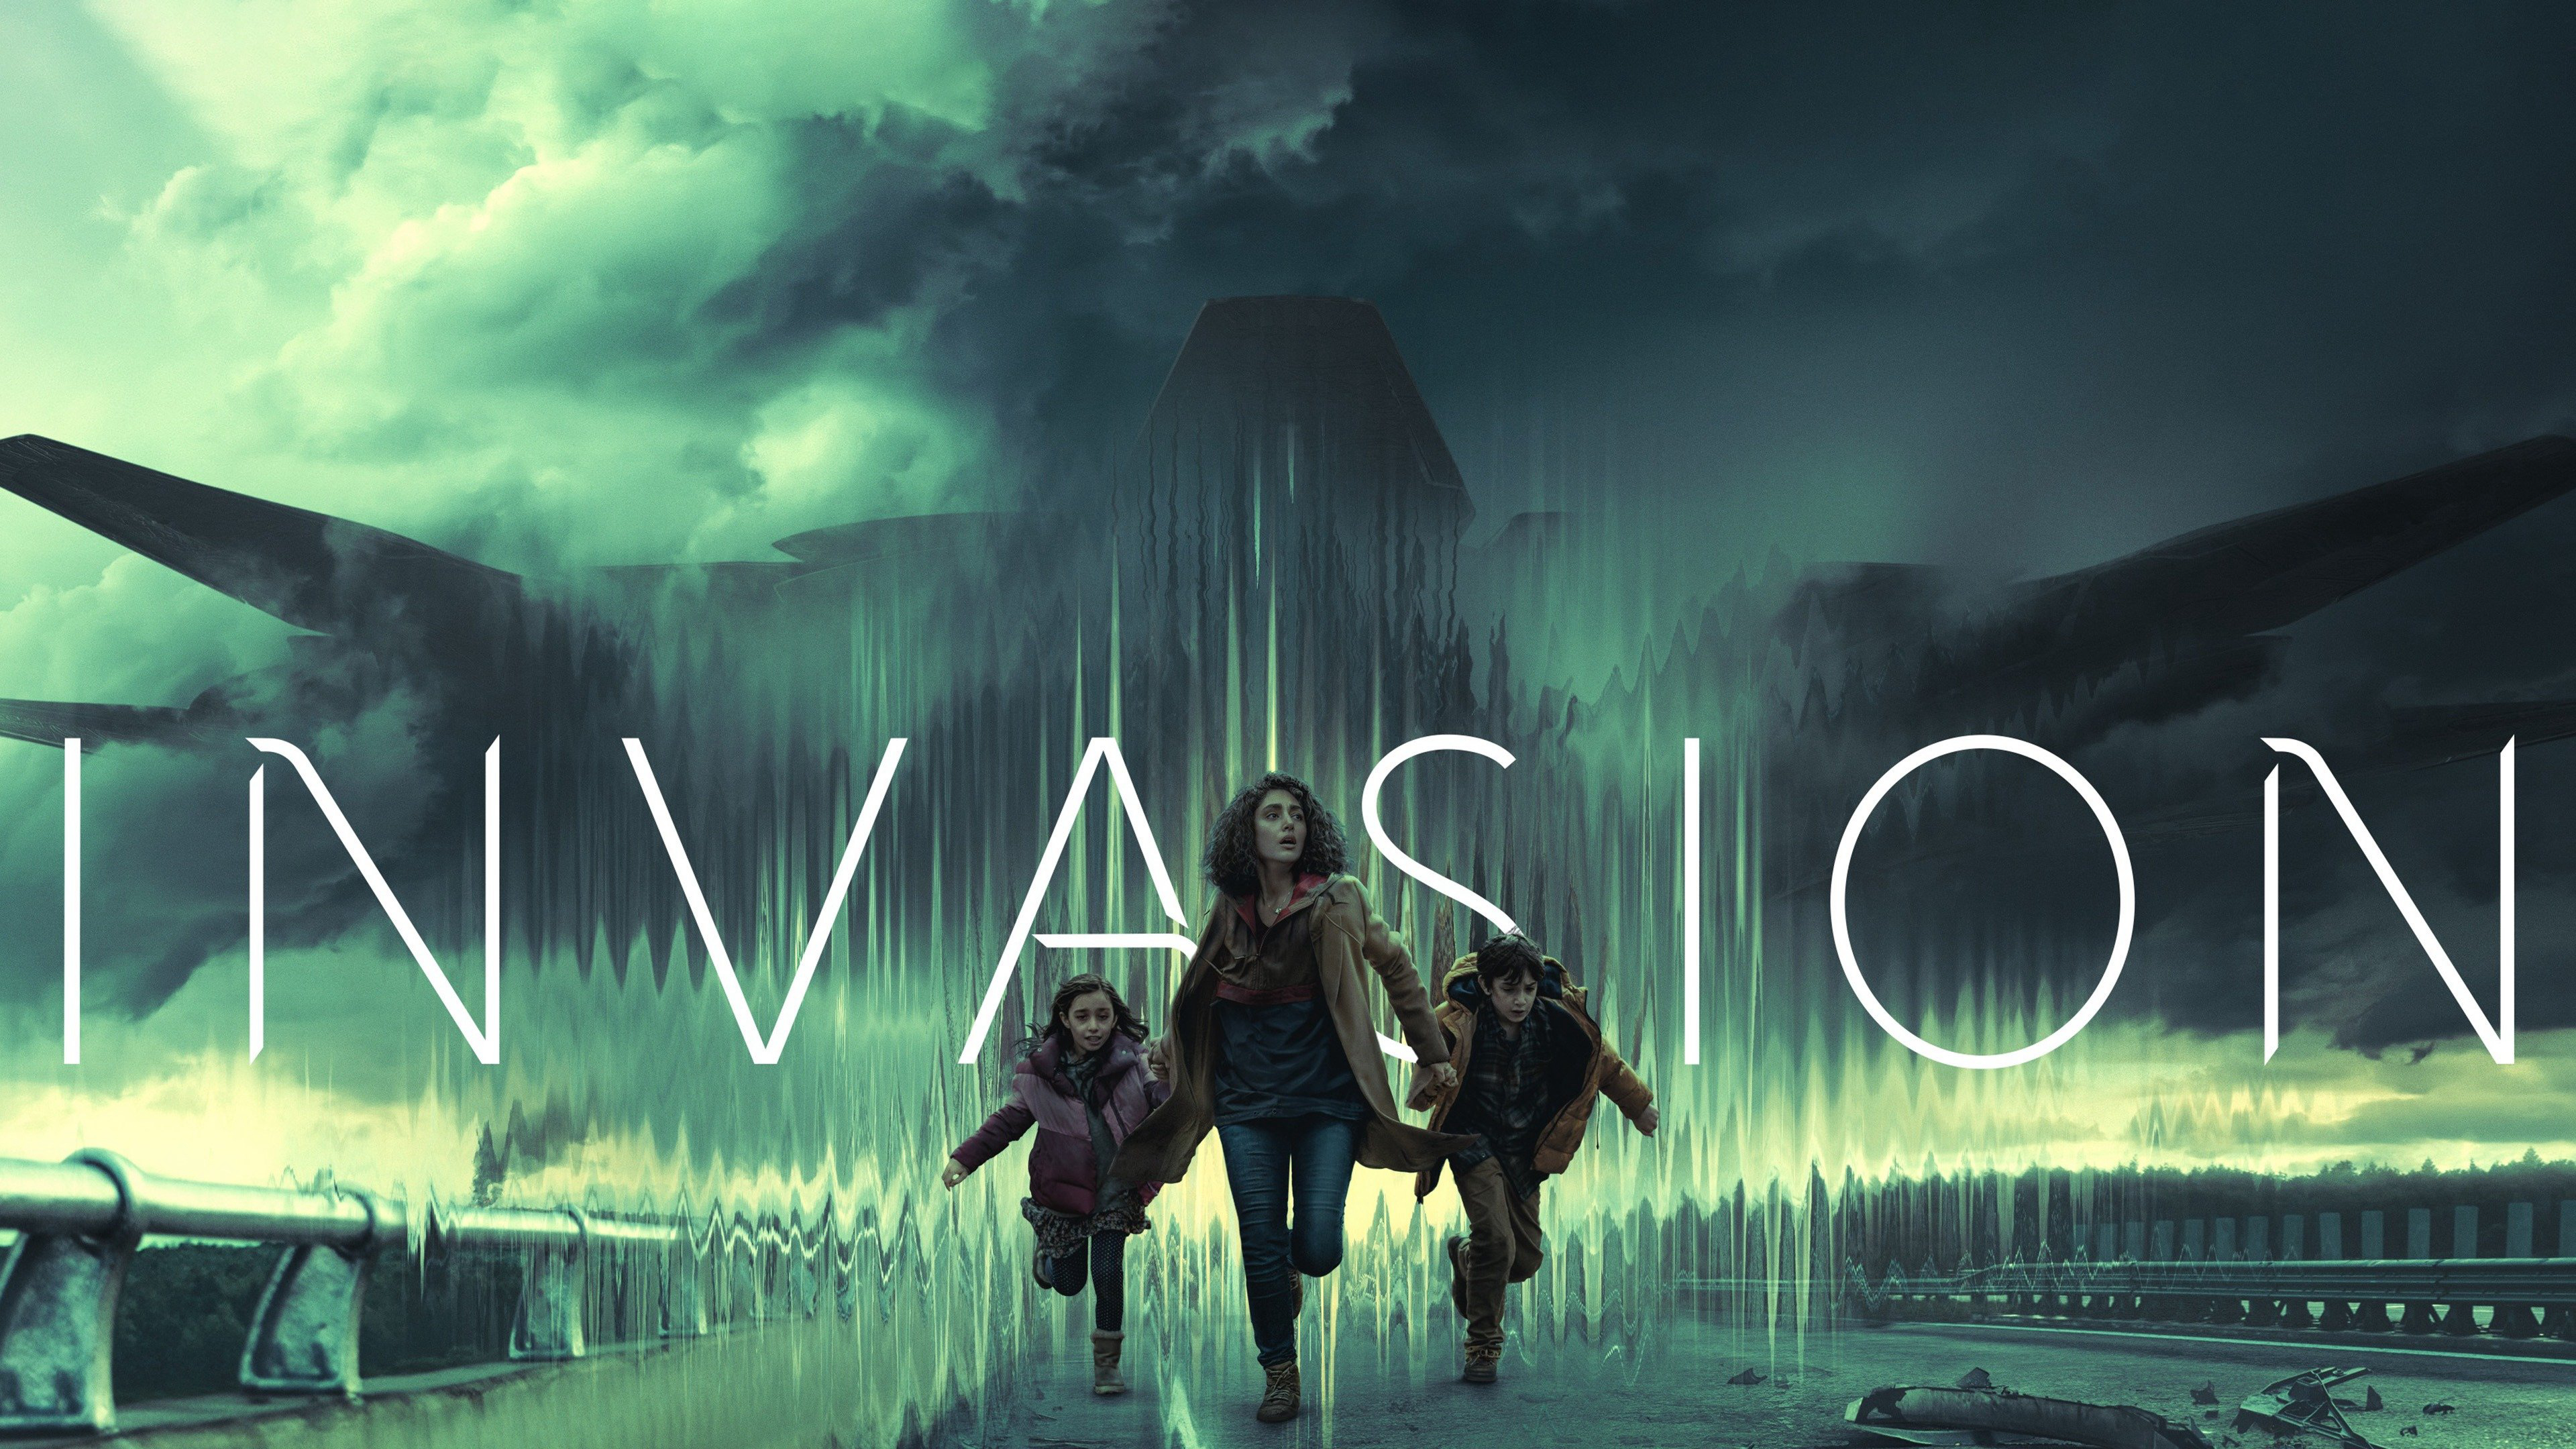 Invasion (Season 1) / Invasion (Season 1) (2021)